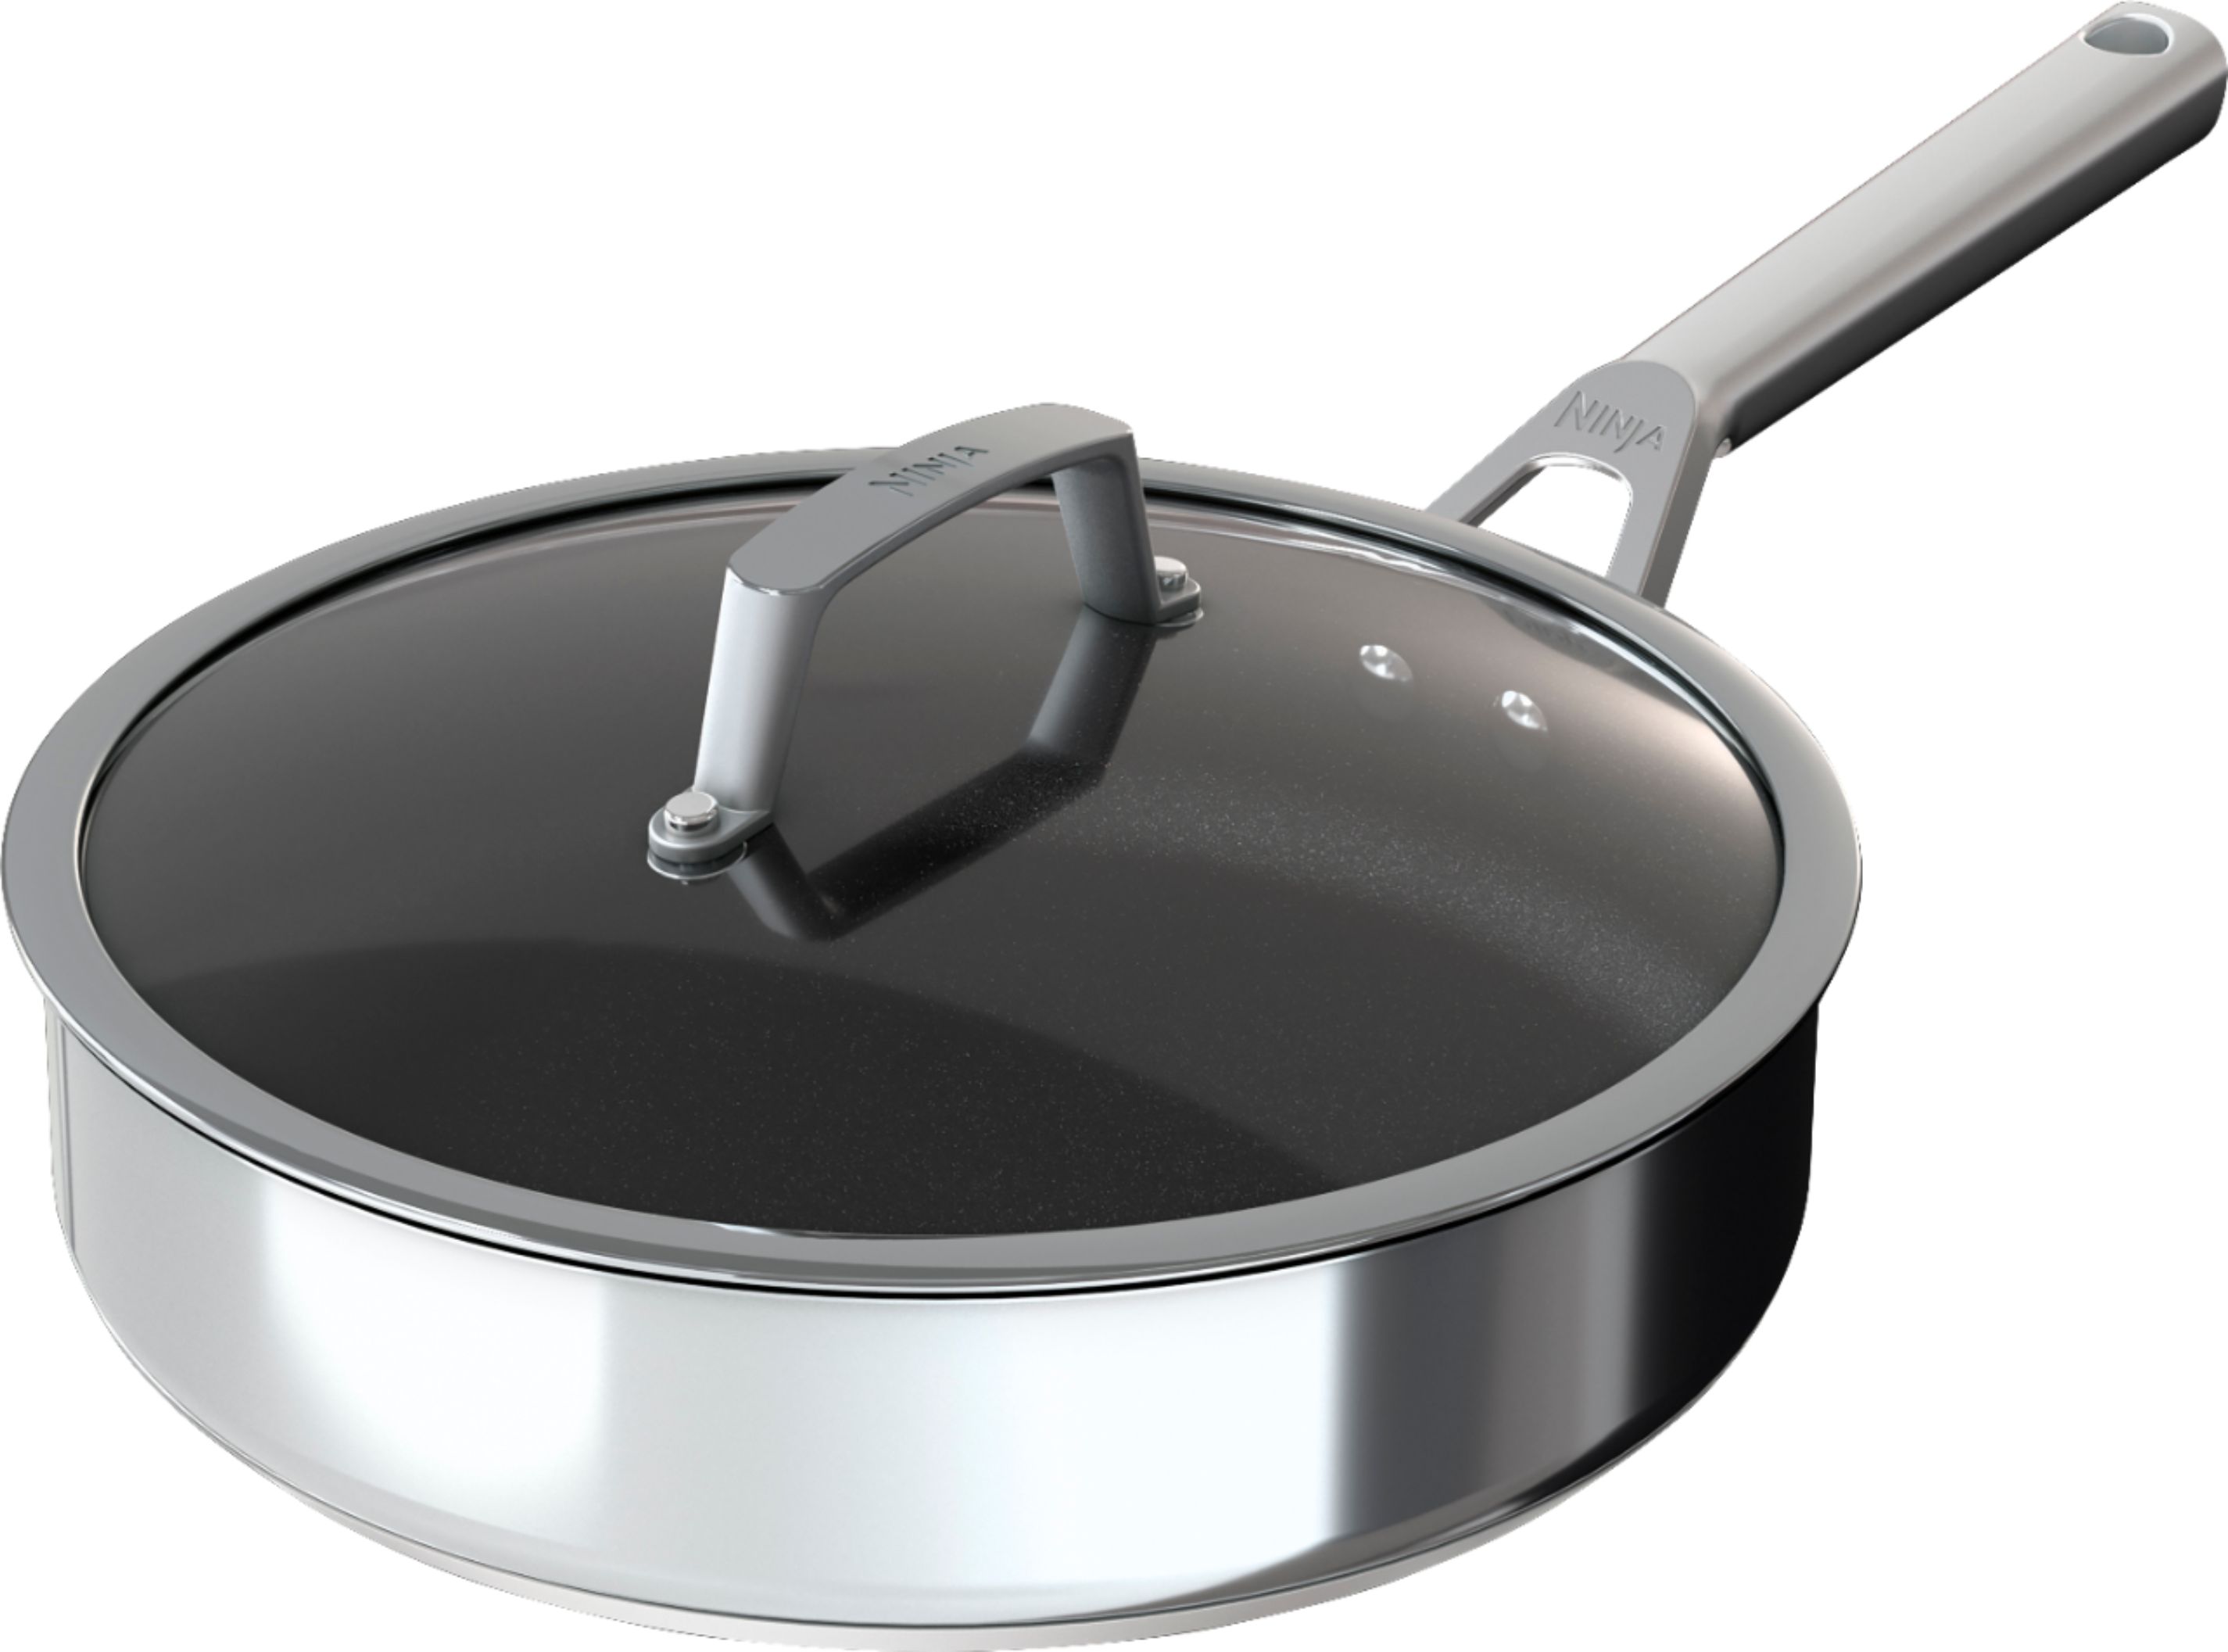 Ninja Foodi NeverStick Stainless 3-Quart Saute Pan with Glass Lid